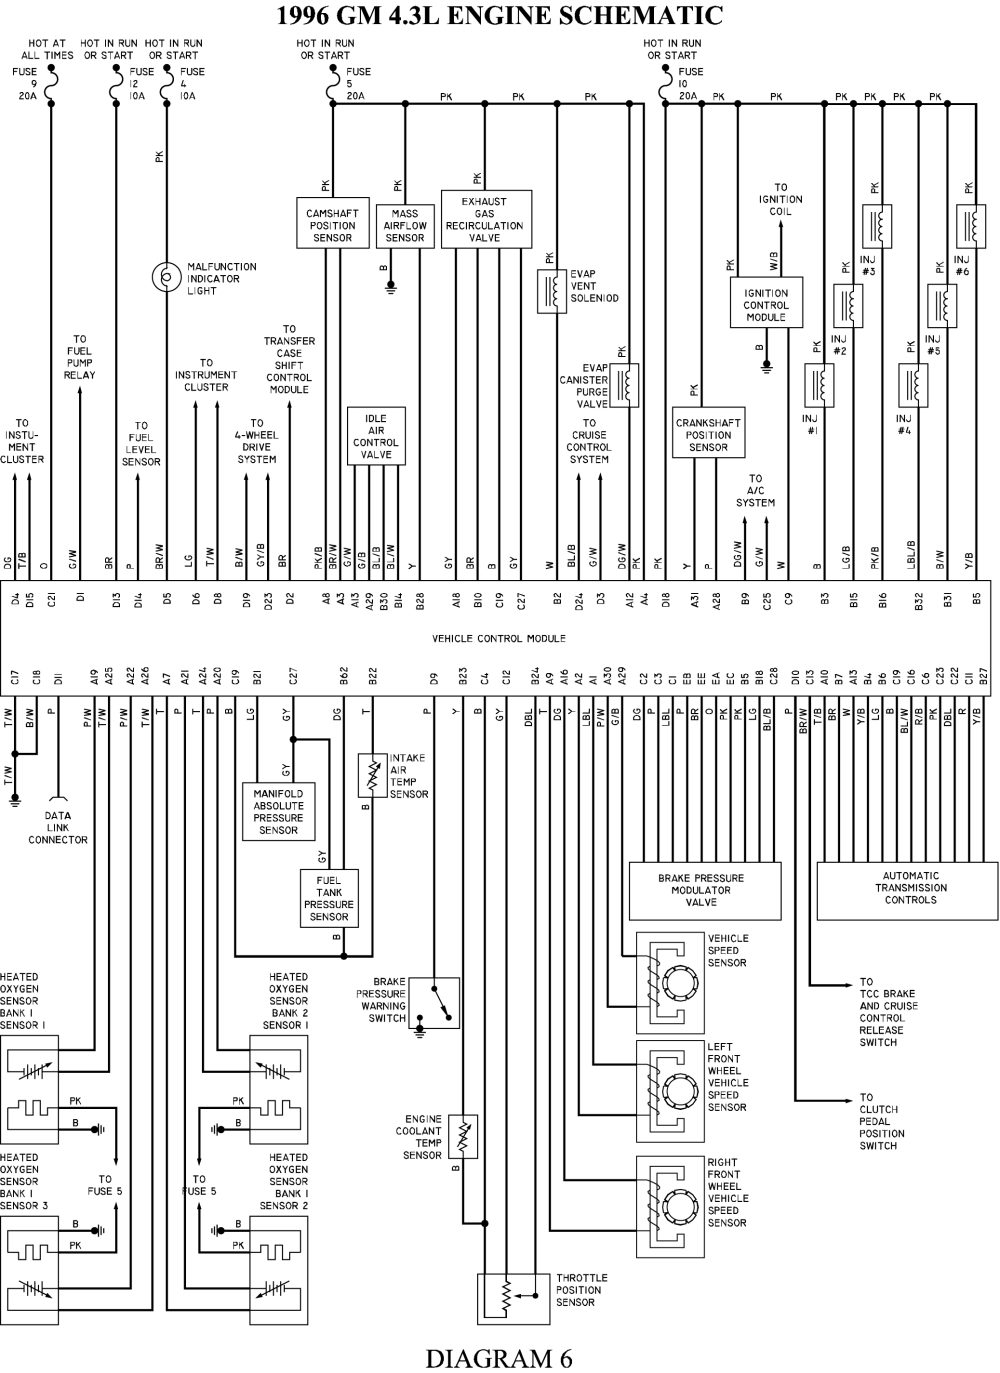 1993 tbi ecm wiring diagram c1500